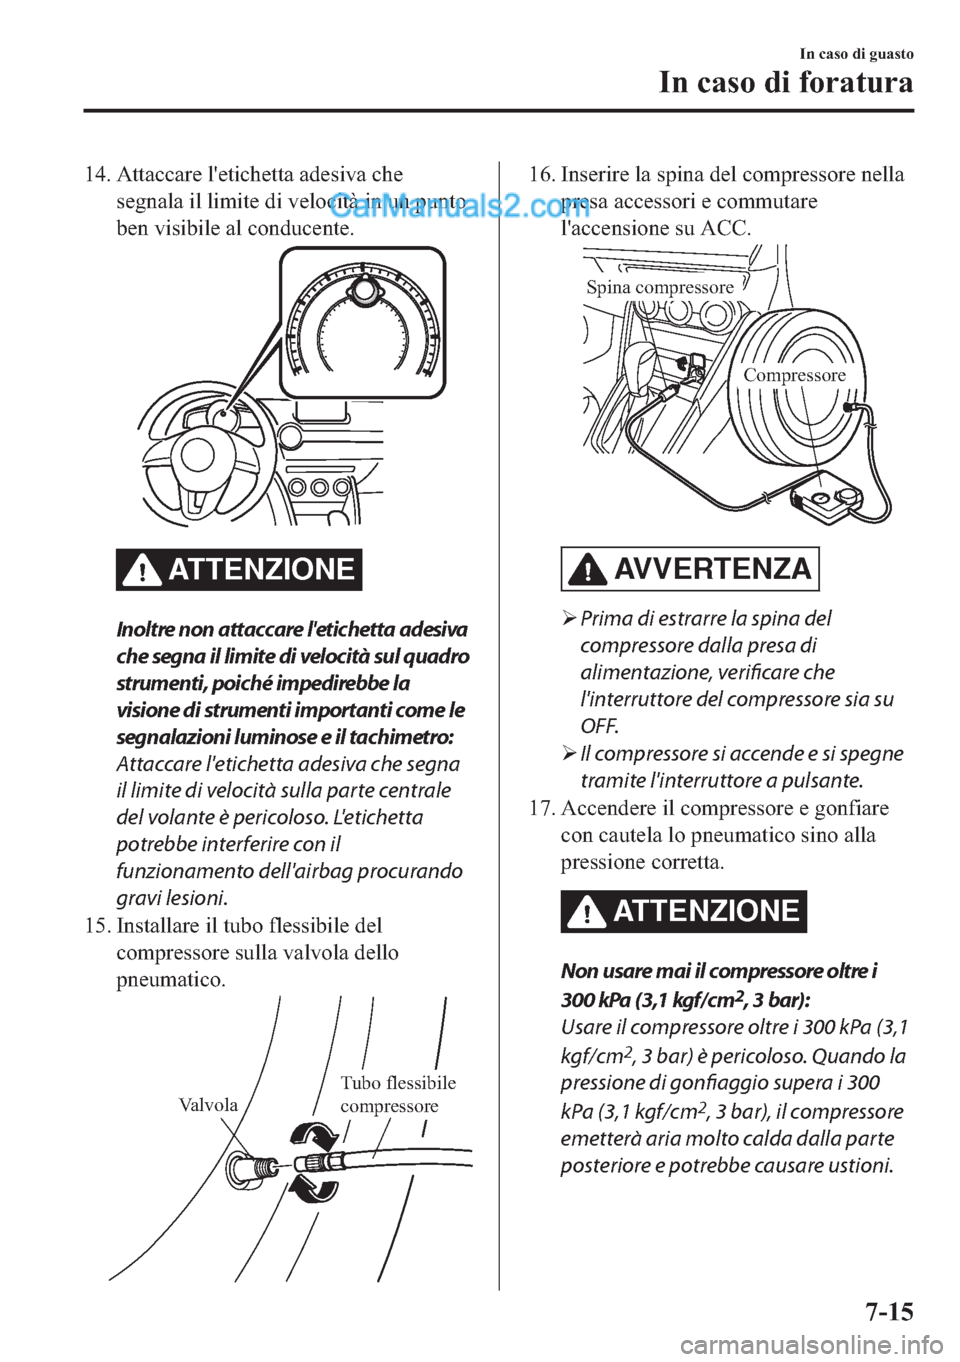 MAZDA MODEL 2 2019  Manuale del proprietario (in Italian) ��� �$�W�W�D�F�F�D�U�H��O�
�H�W�L�F�K�H�W�W�D��D�G�H�V�L�Y�D��F�K�H
�V�H�J�Q�D�O�D��L�O��O�L�P�L�W�H��G�L��Y�H�O�R�F�L�W�j��L�Q��X�Q��S�X�Q�W�R
�E�H�Q��Y�L�V�L�E�L�O�H��D�O��F�R�Q�G�X�